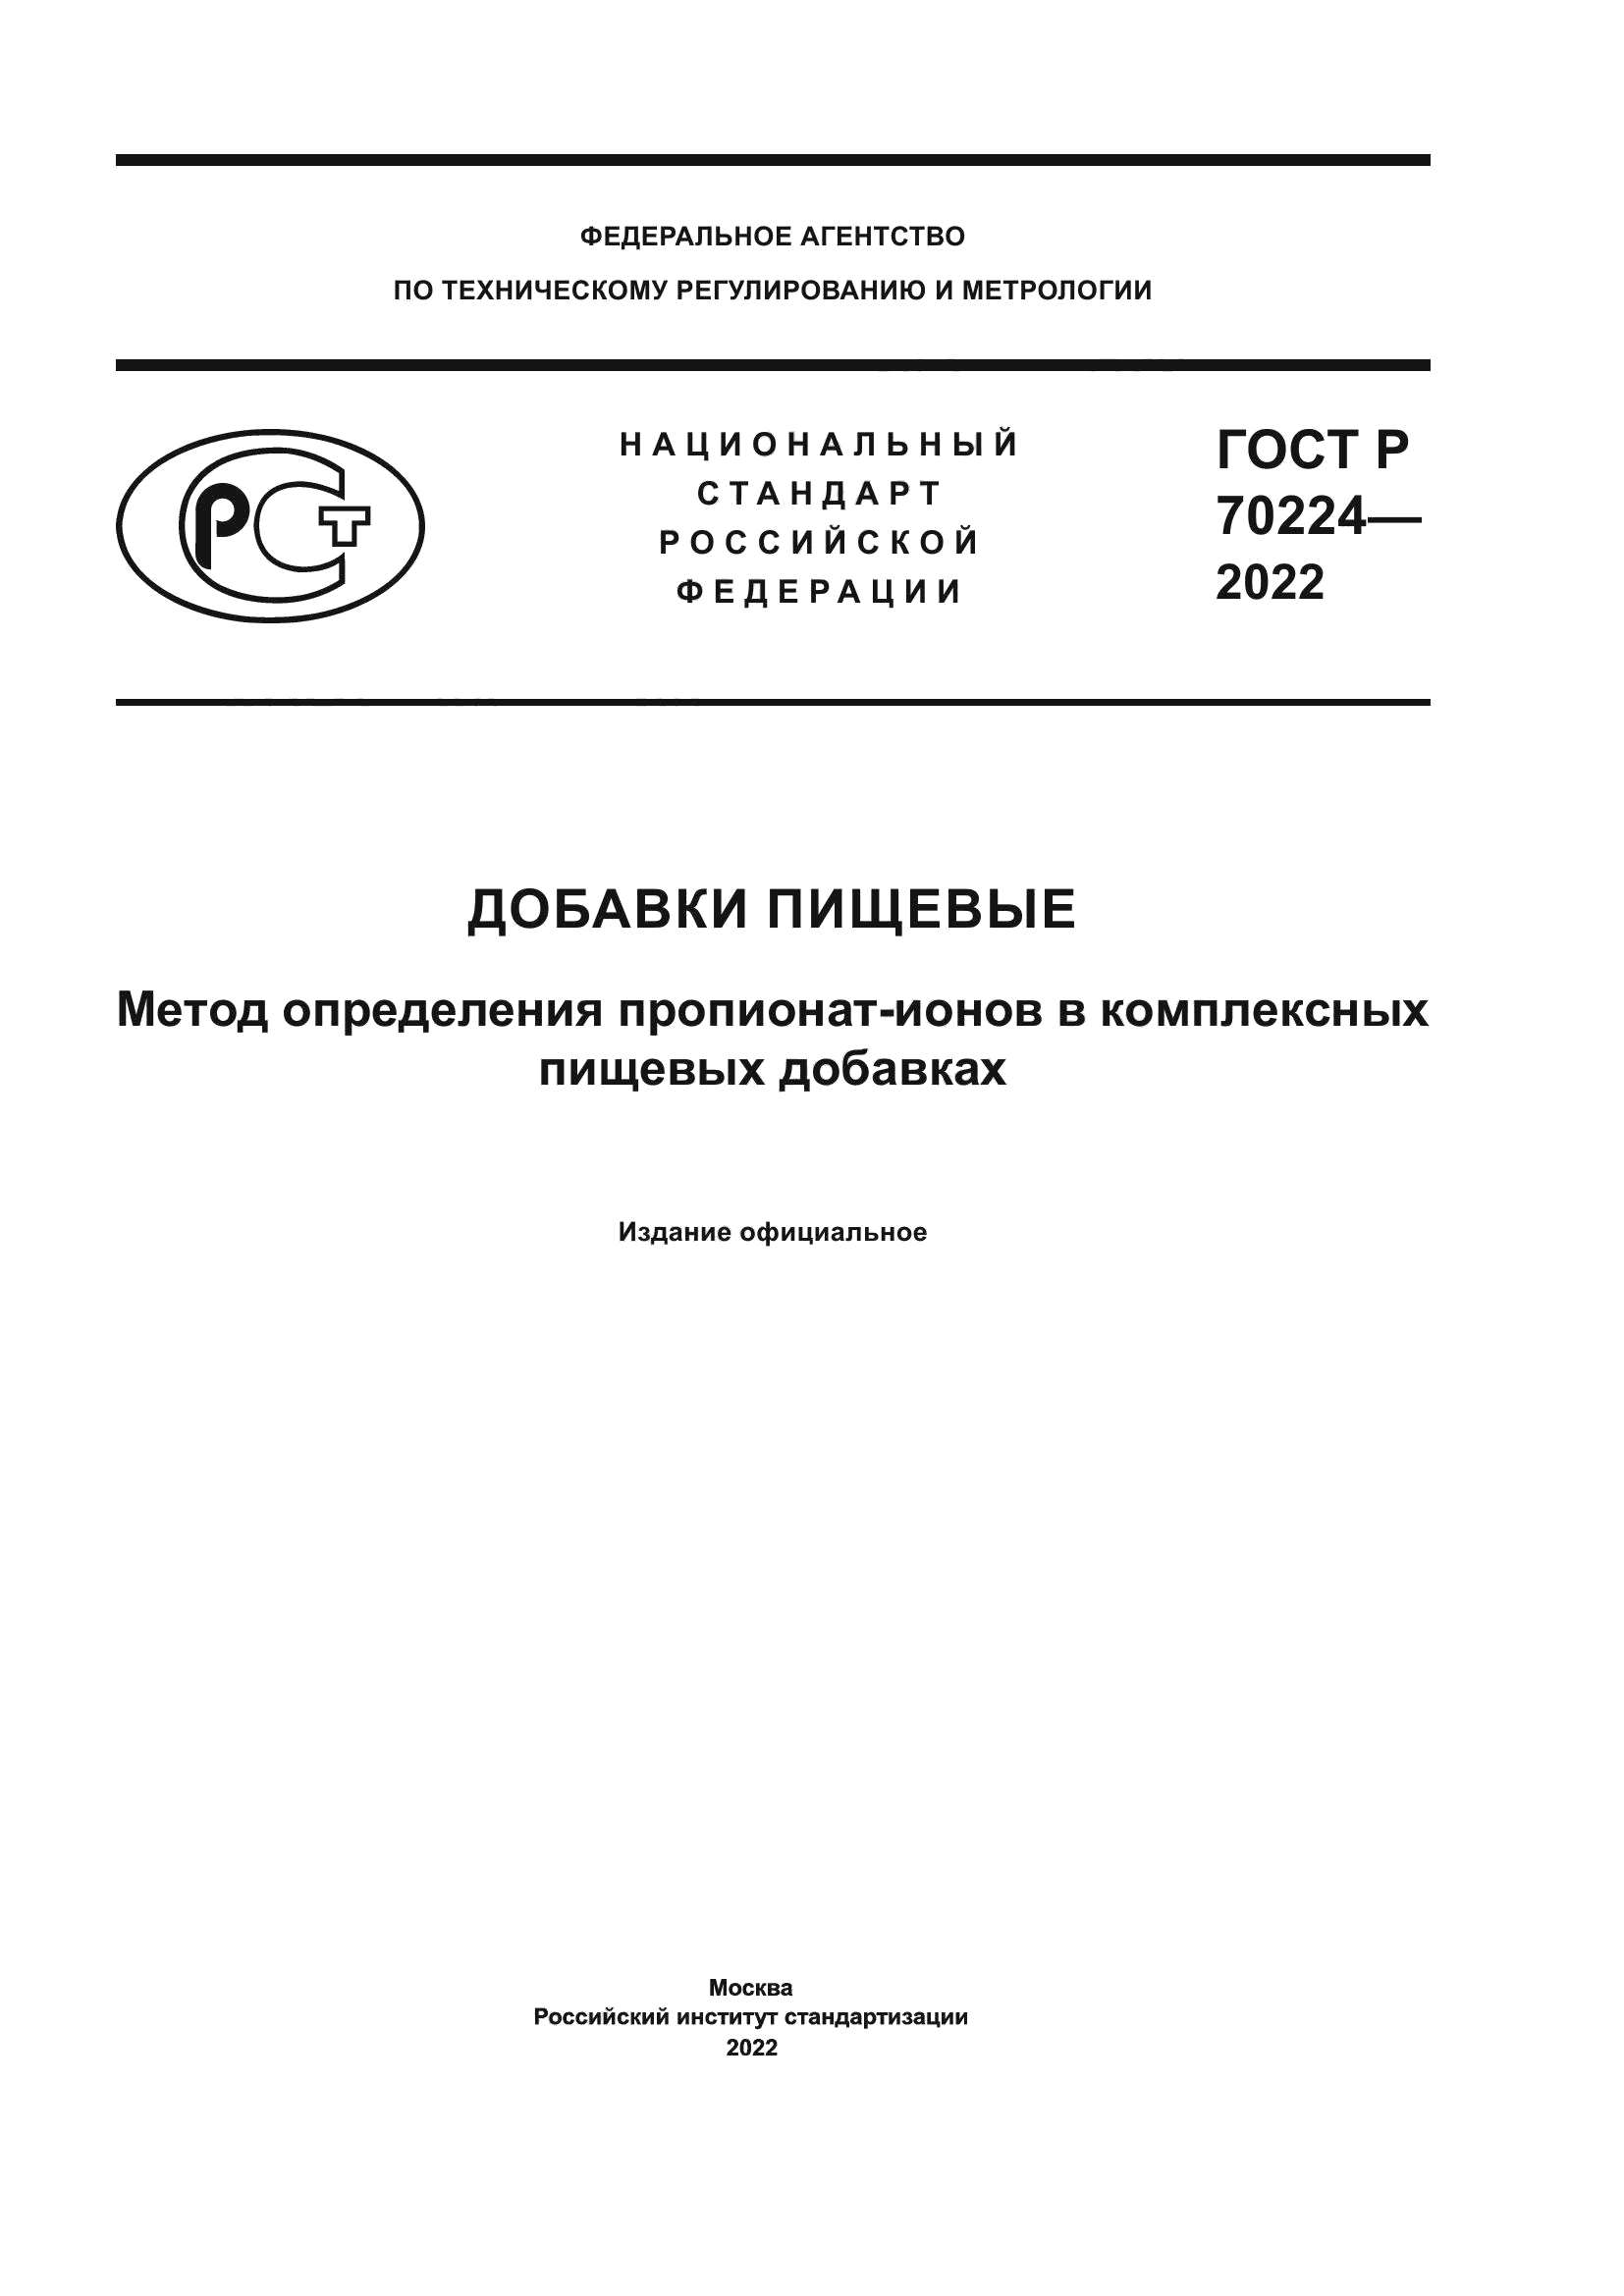 ГОСТ Р 70224-2022